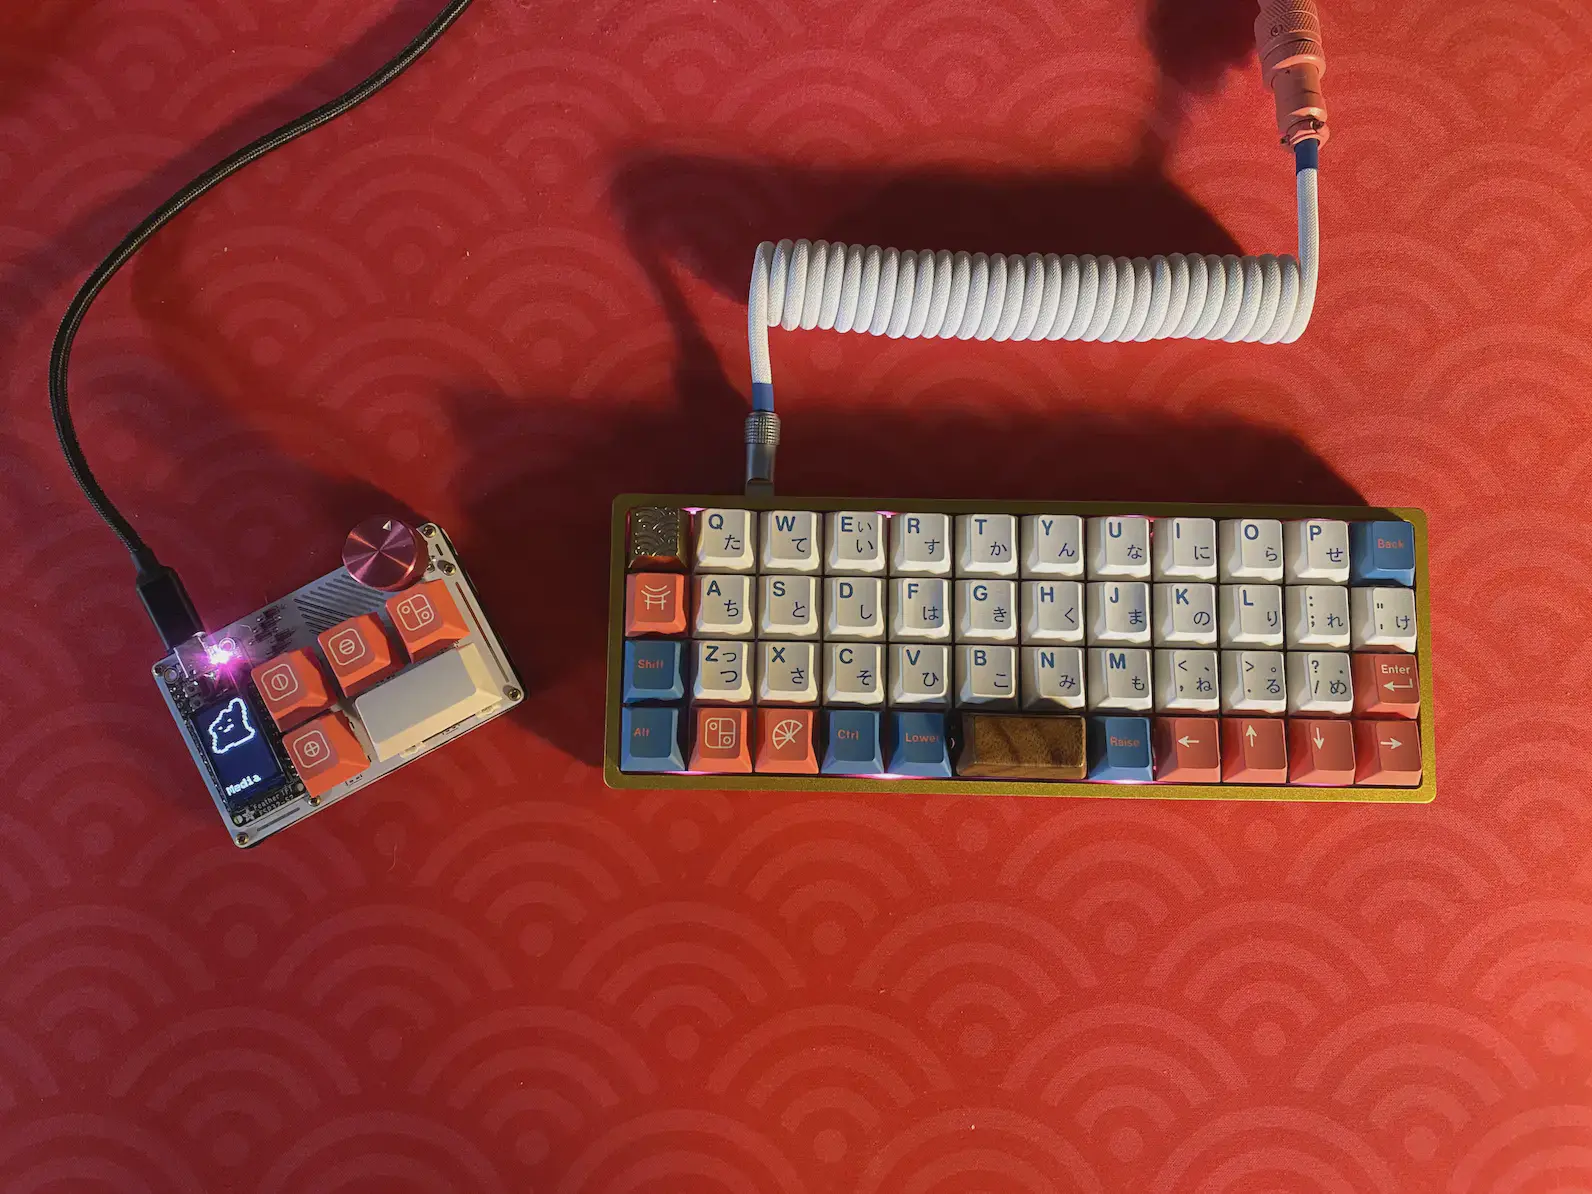 an olkb planck keyboard using a gmk bentō keycap set alongside a small custom macropad